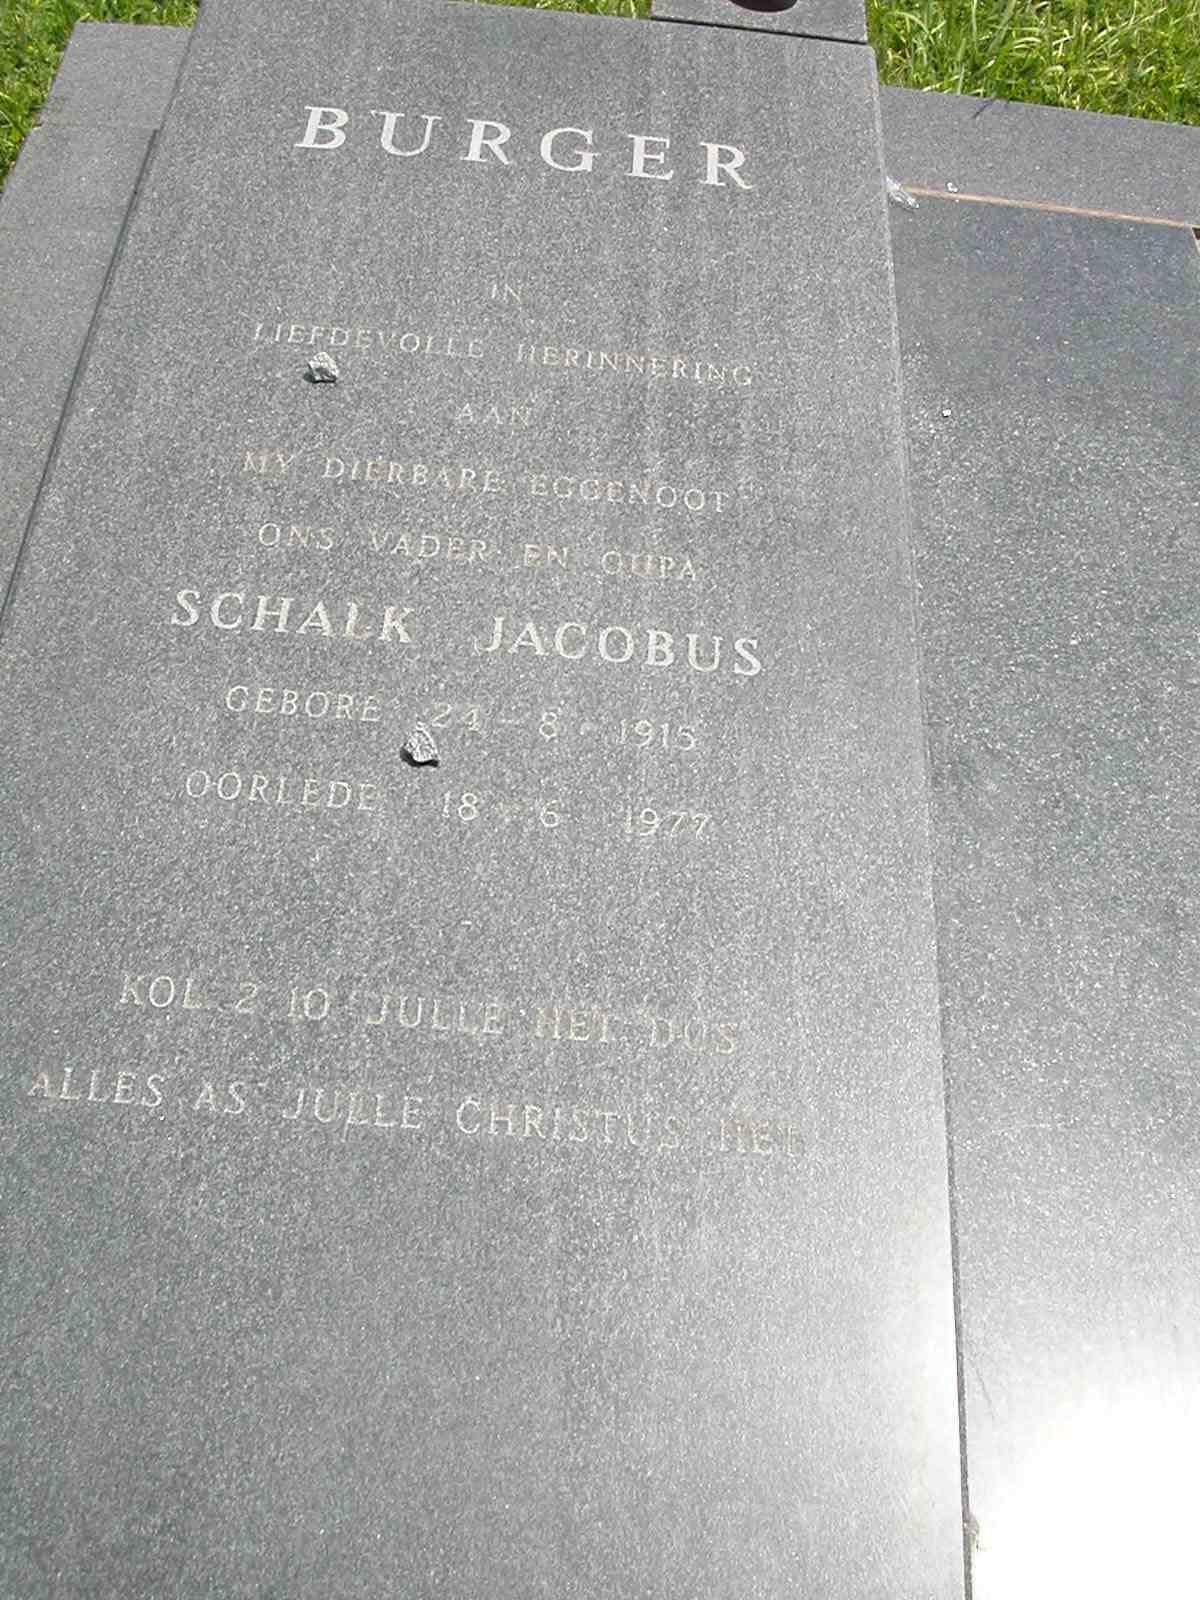 BURGER Schalk Jacobus 1915-1977